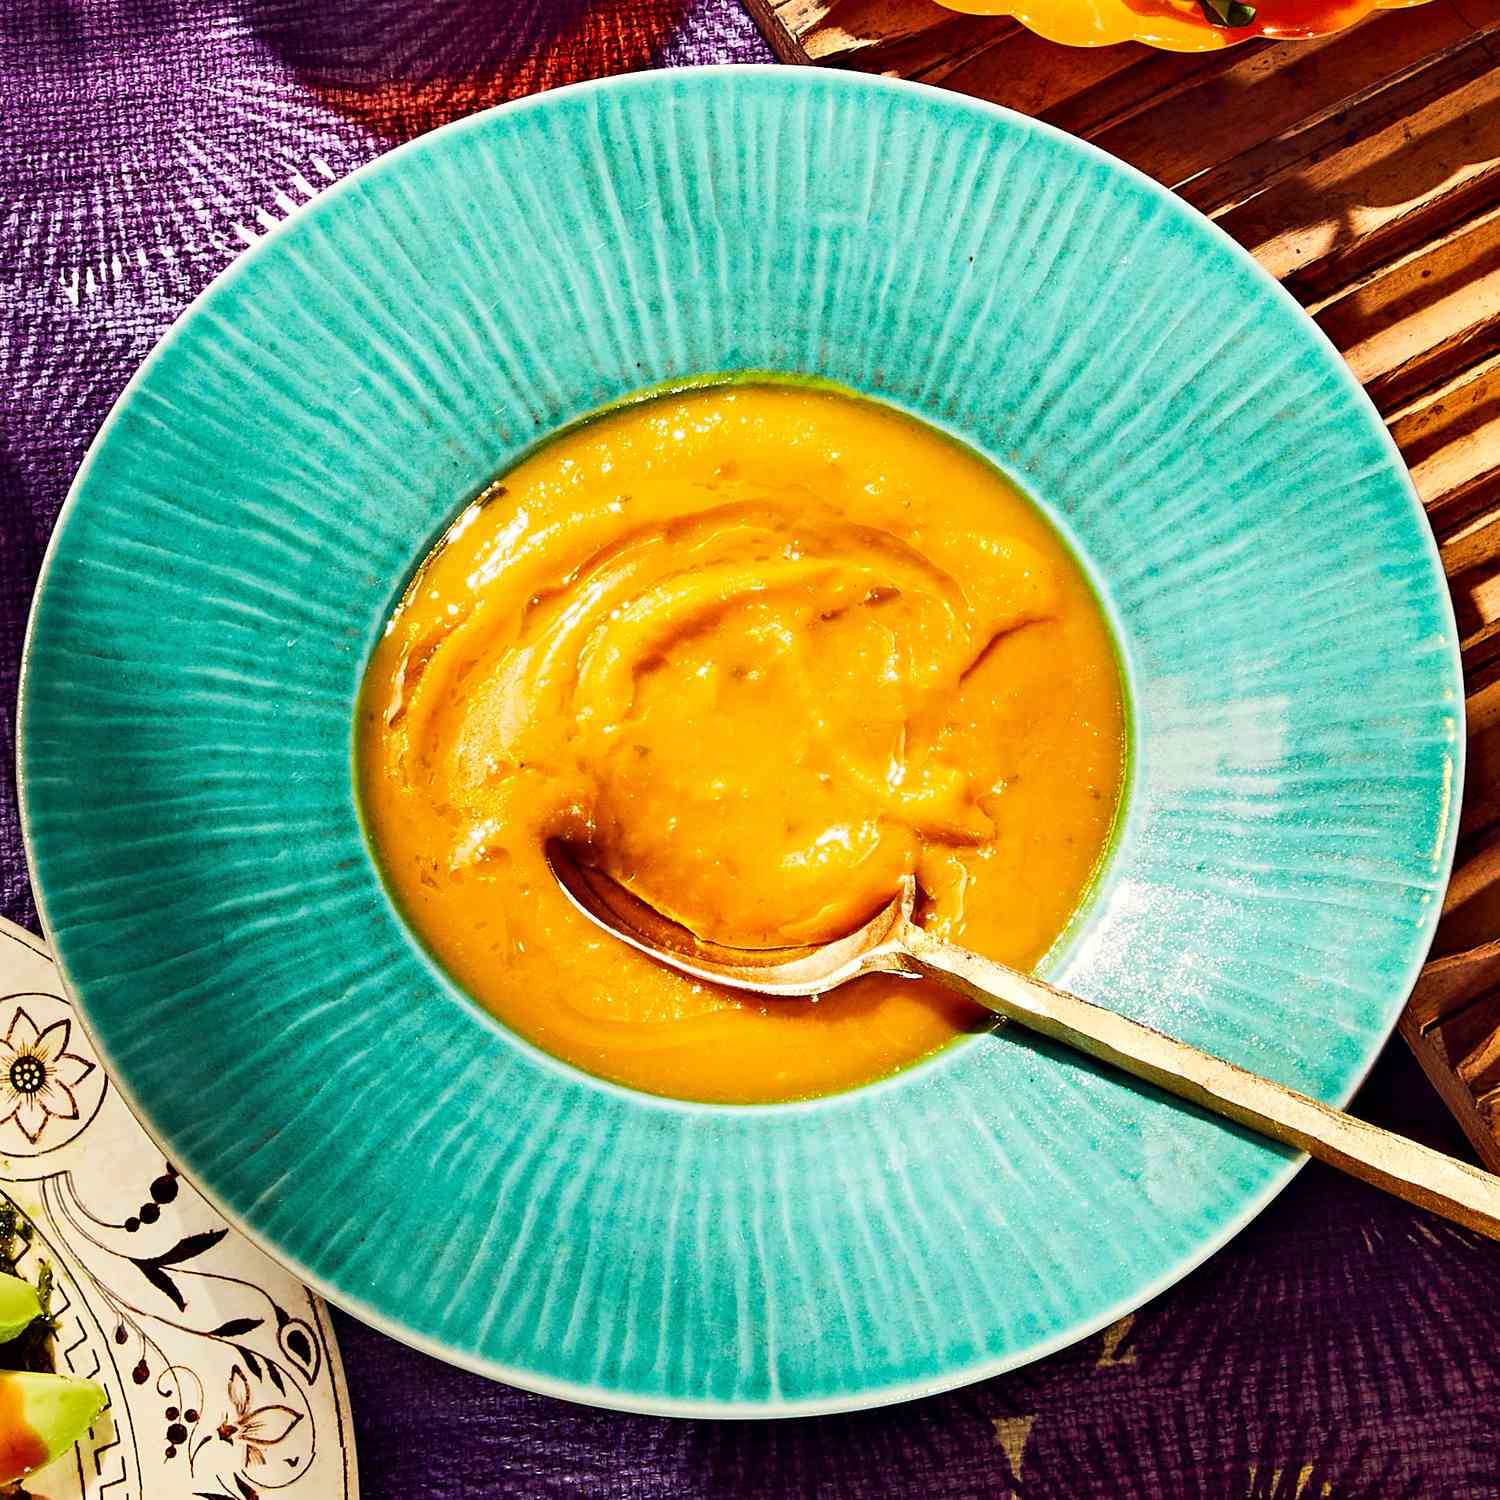 Sopa de Calabaza Rostizada (Roasted Pumpkin Soup)